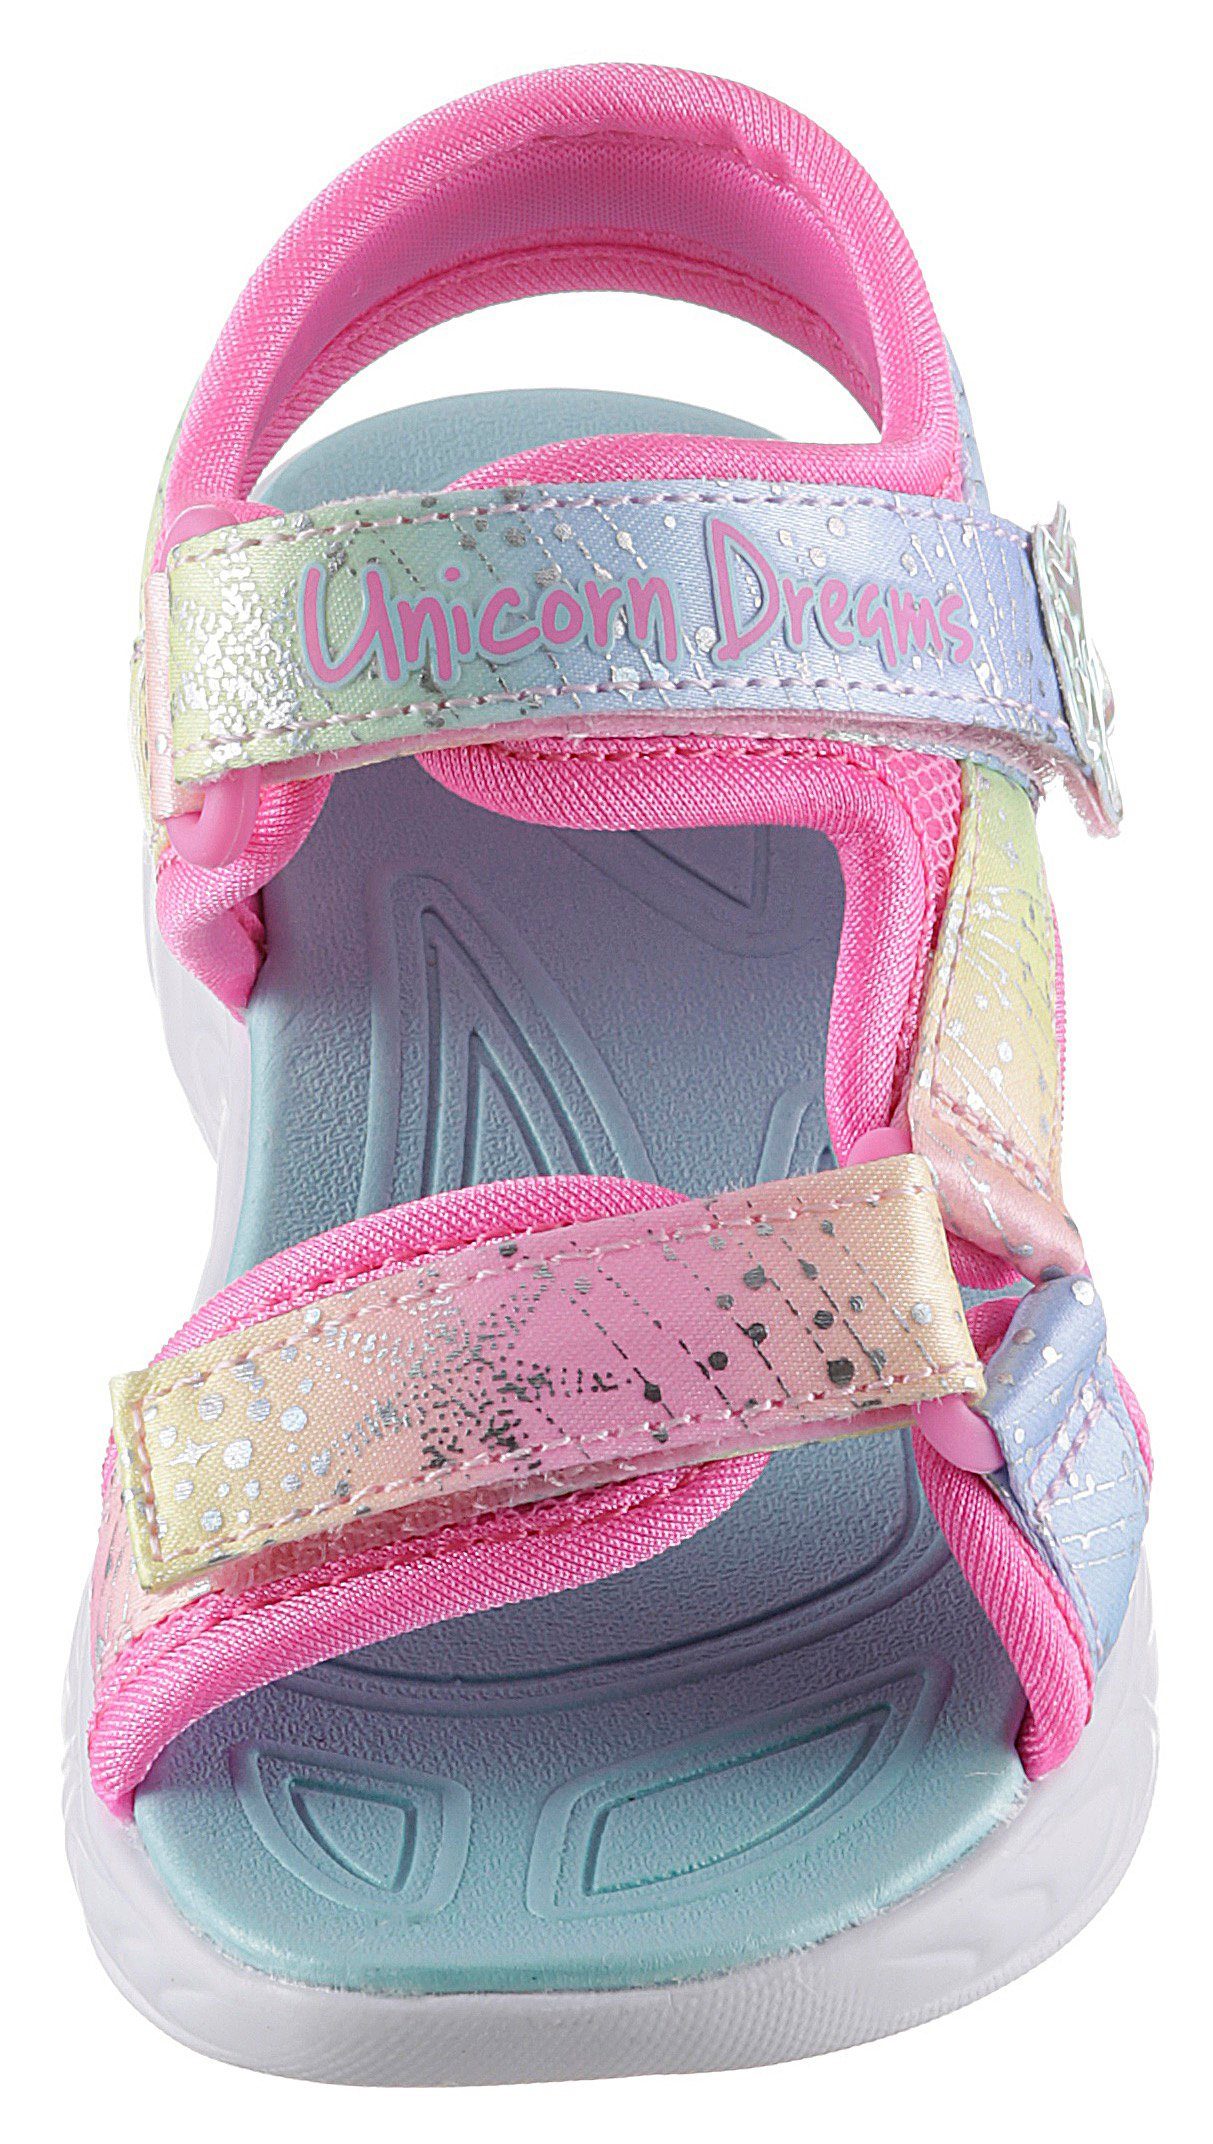 Skechers Kids UNICORN DREAMS SANDAL Sandale Schritt MAJESTIC jedem leuchtet bei BLISS pink-kombiniert